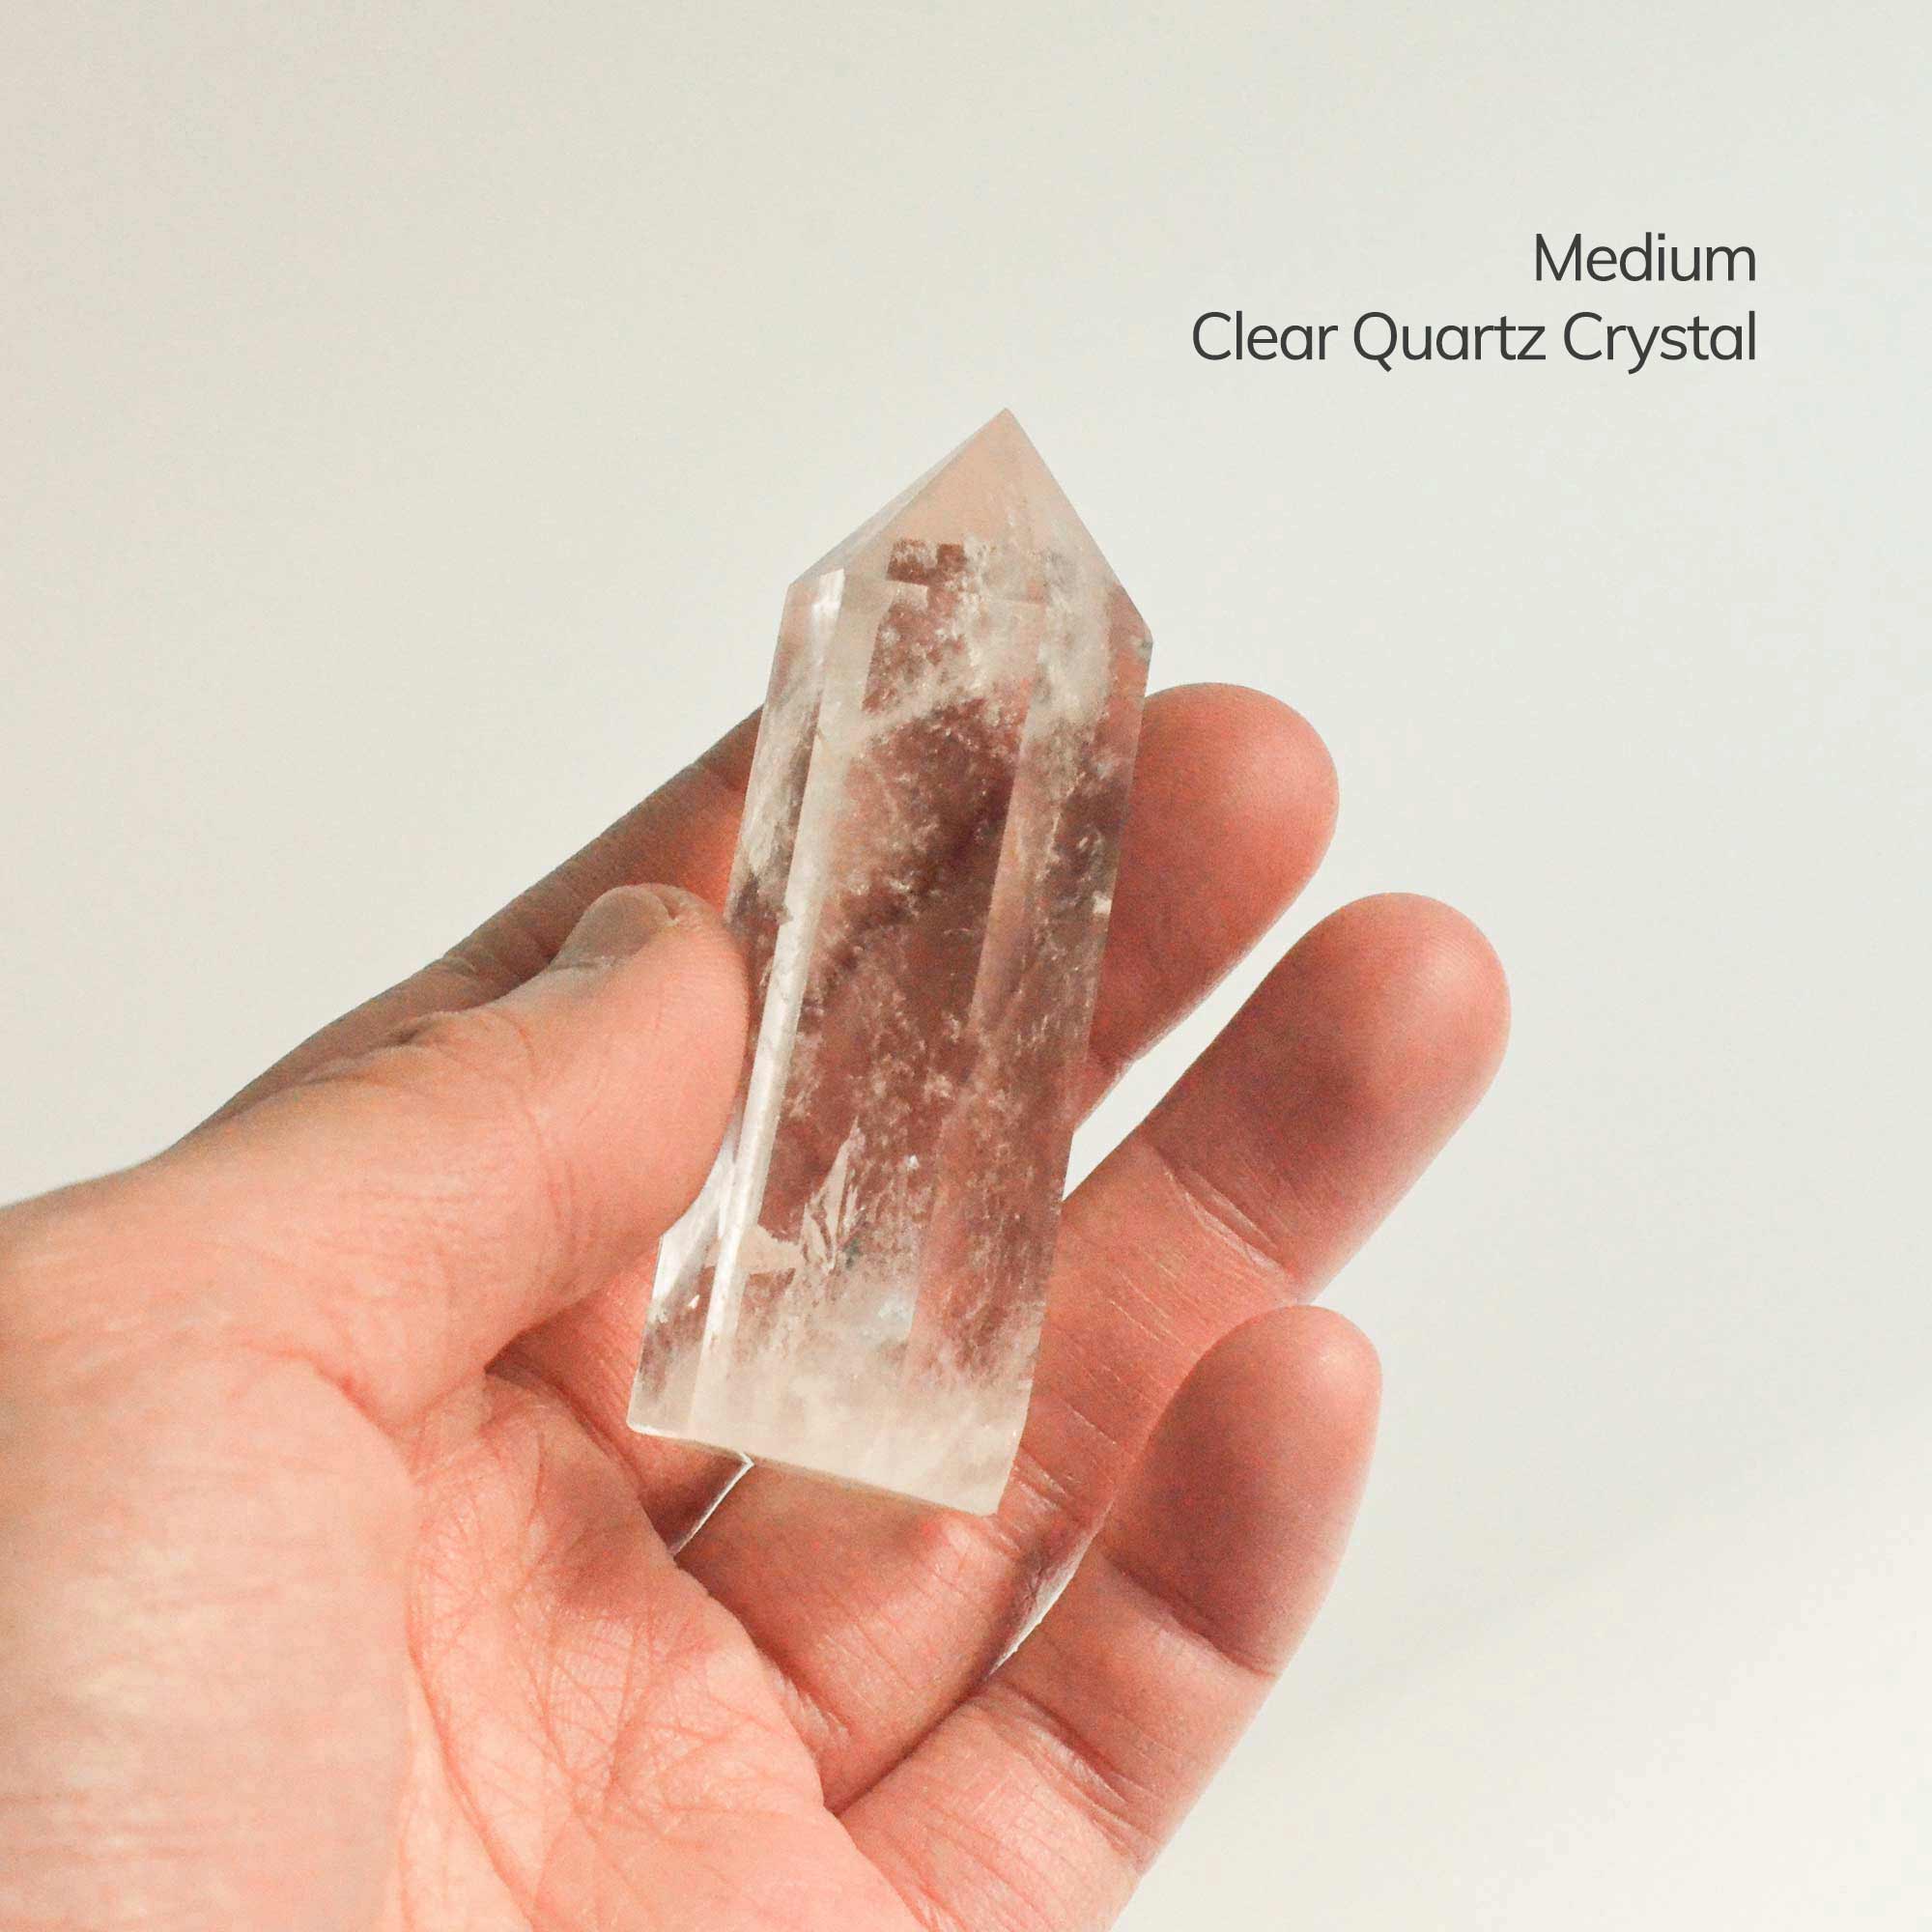 holding medium clear quartz crystal